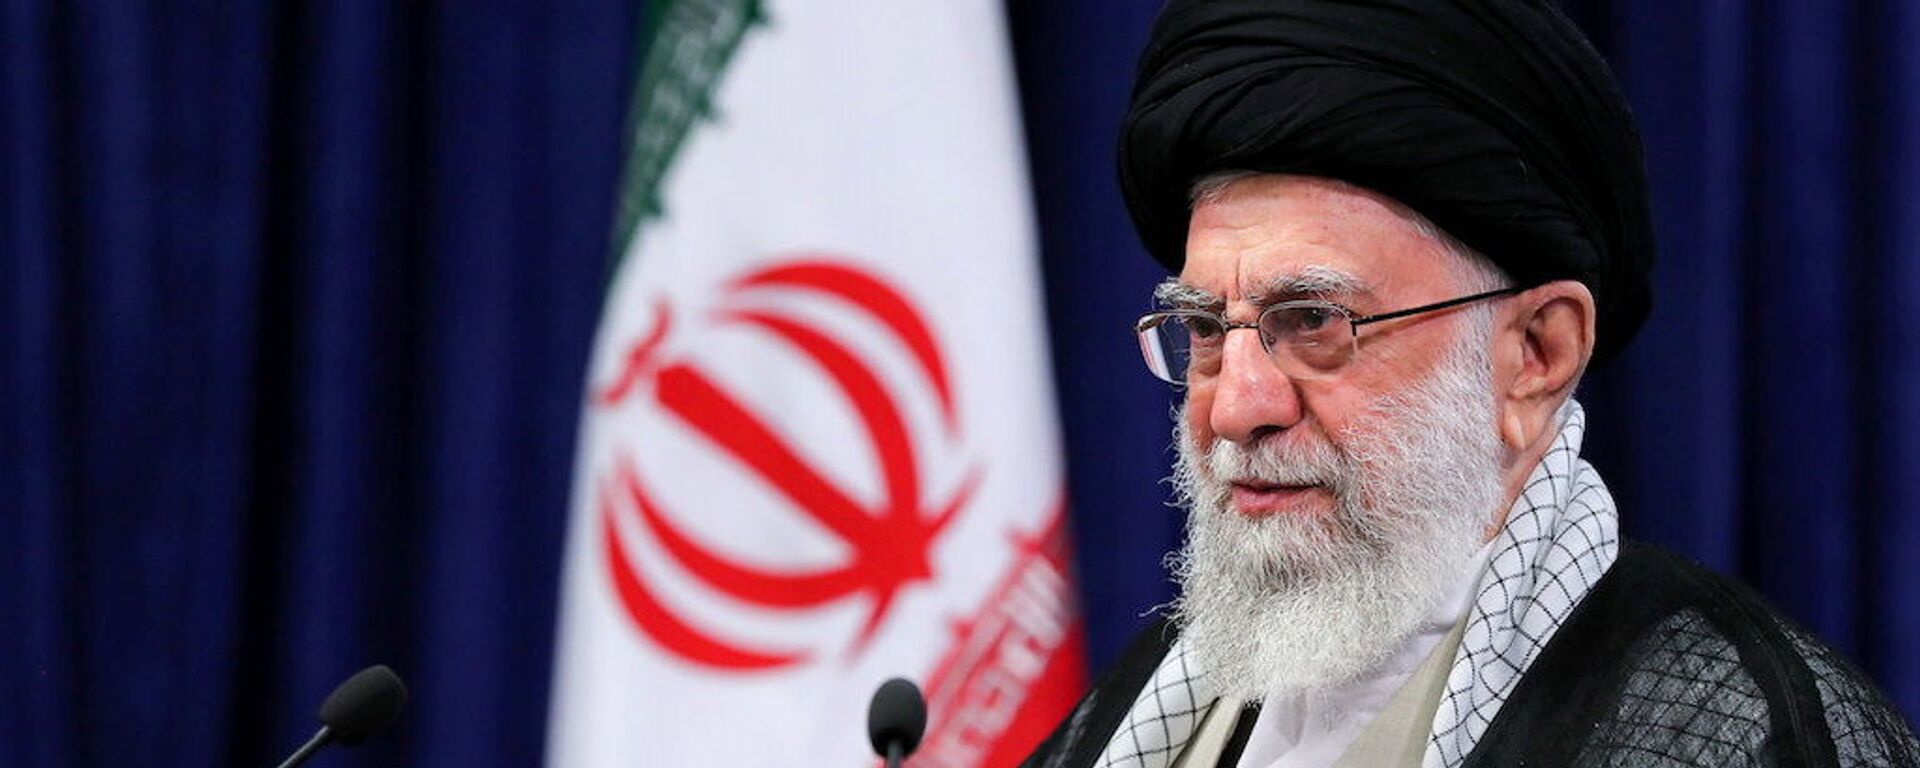 Iran's Supreme Leader Ayatollah Ali Khamenei delivers a televised speech in Tehran, Iran, 4 June 2021.  - Sputnik International, 1920, 28.07.2021